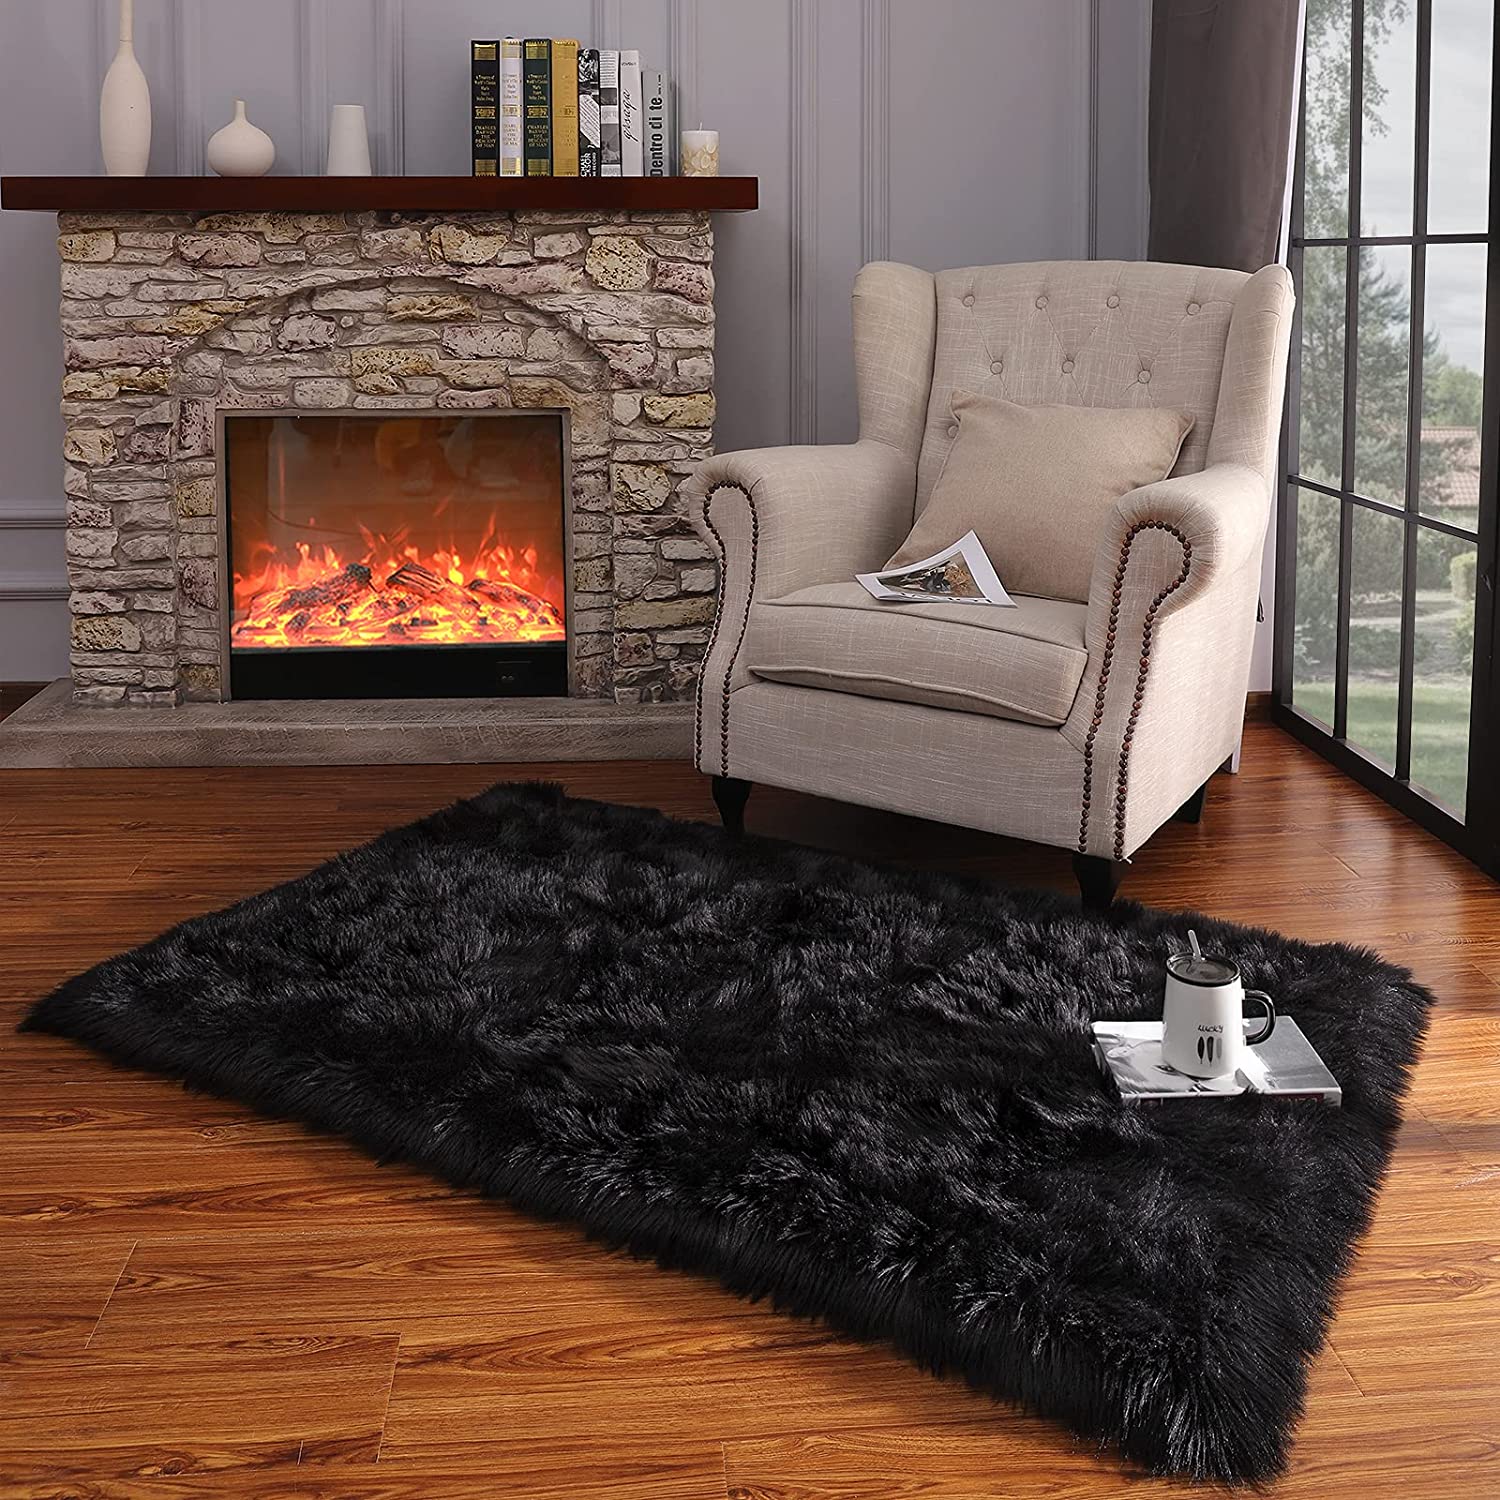 Dwelke Faux Black Fur Rug Ultra Soft Fluffy Sheepskin Fur Area Rugs for Bedroom Carpet Sofa Living Room